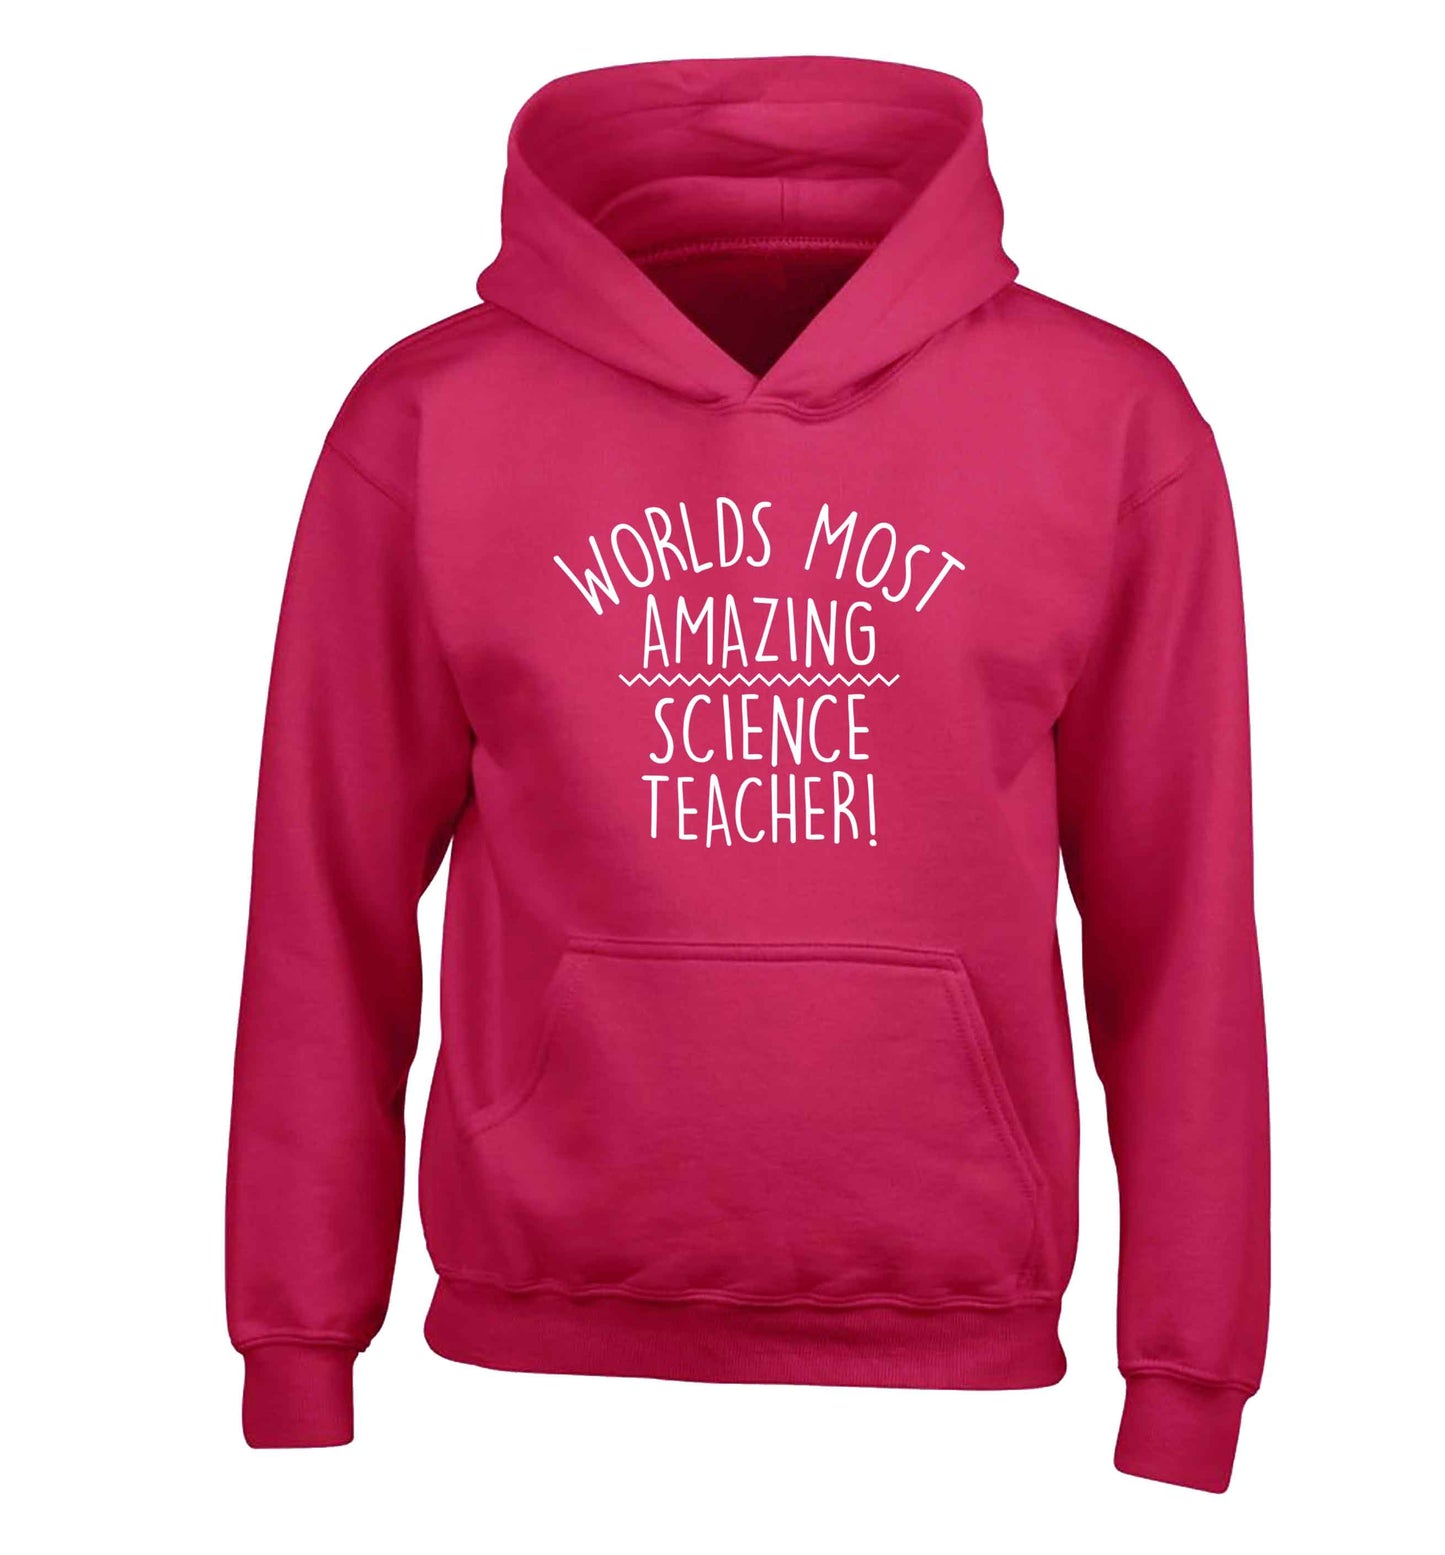 Worlds most amazing science teacher children's pink hoodie 12-13 Years